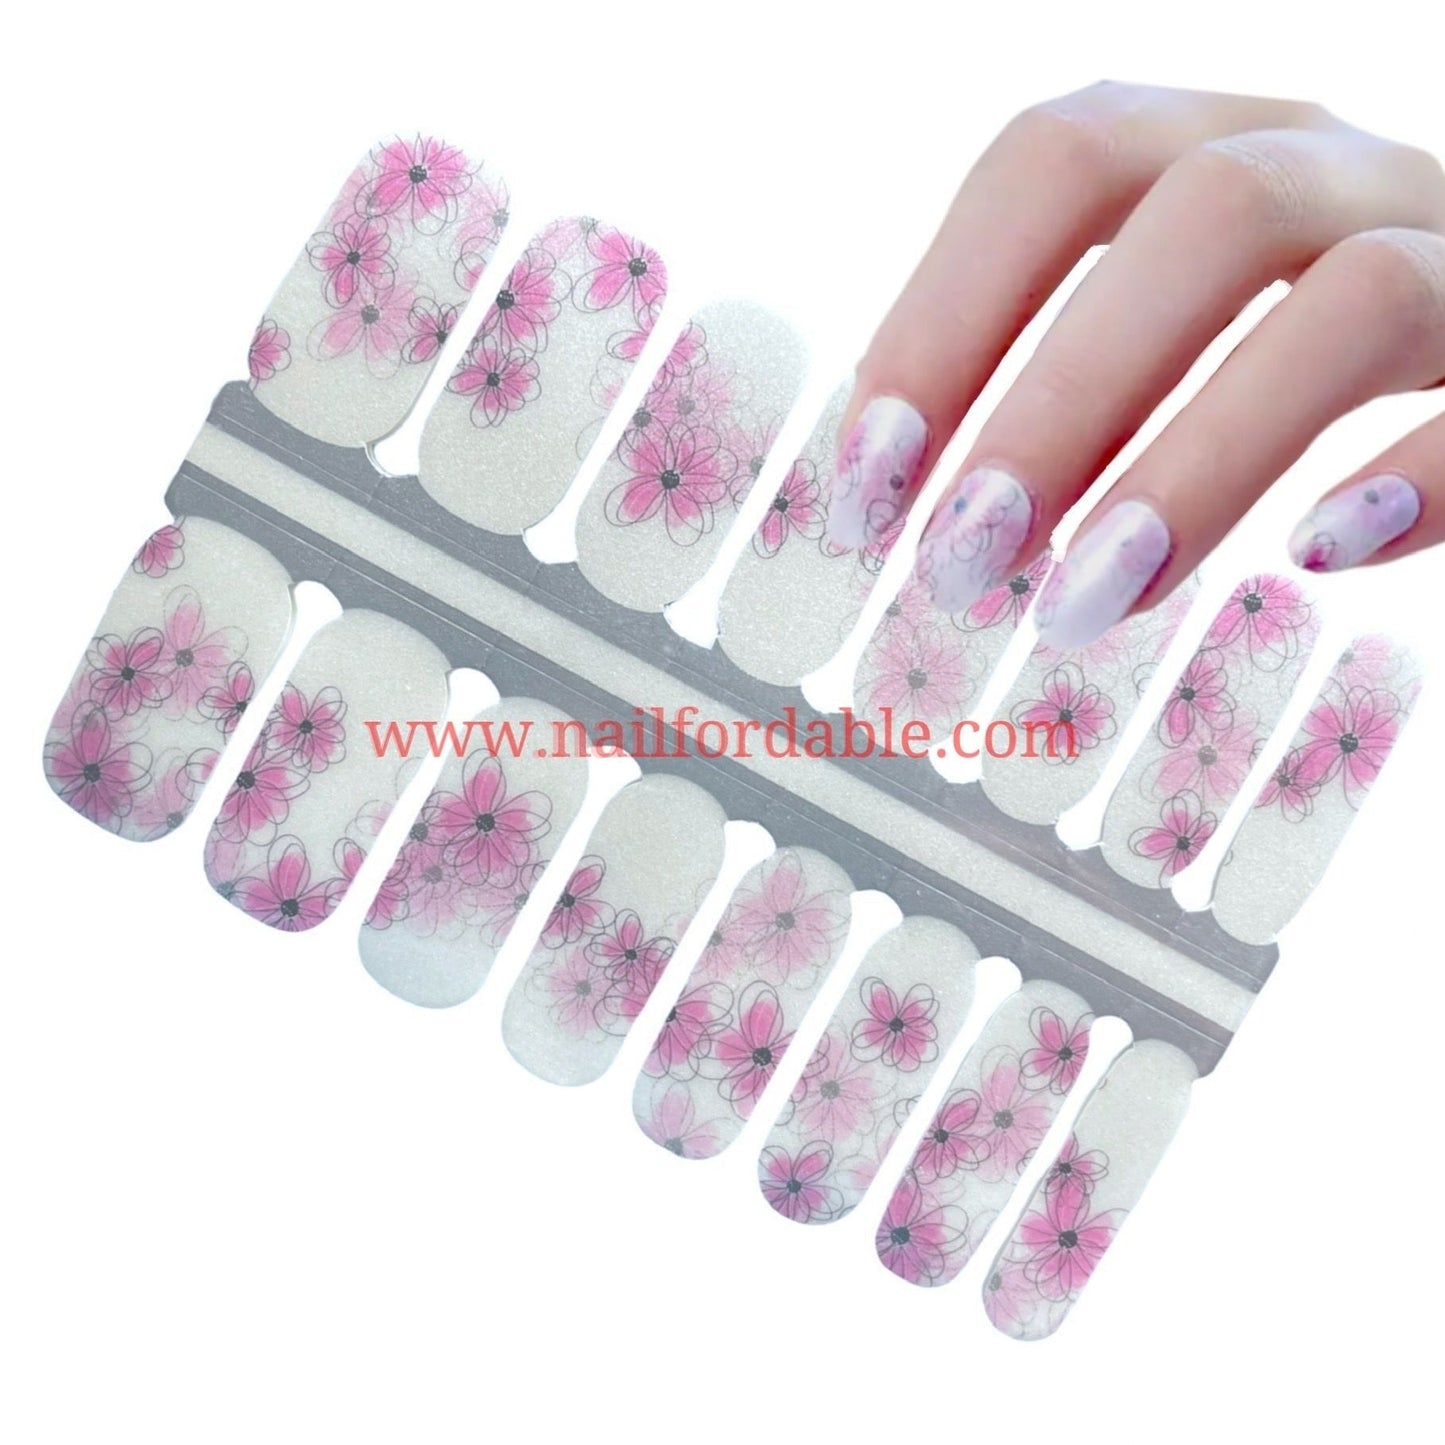 Pink petunias Nail Wraps | Semi Cured Gel Wraps | Gel Nail Wraps |Nail Polish | Nail Stickers